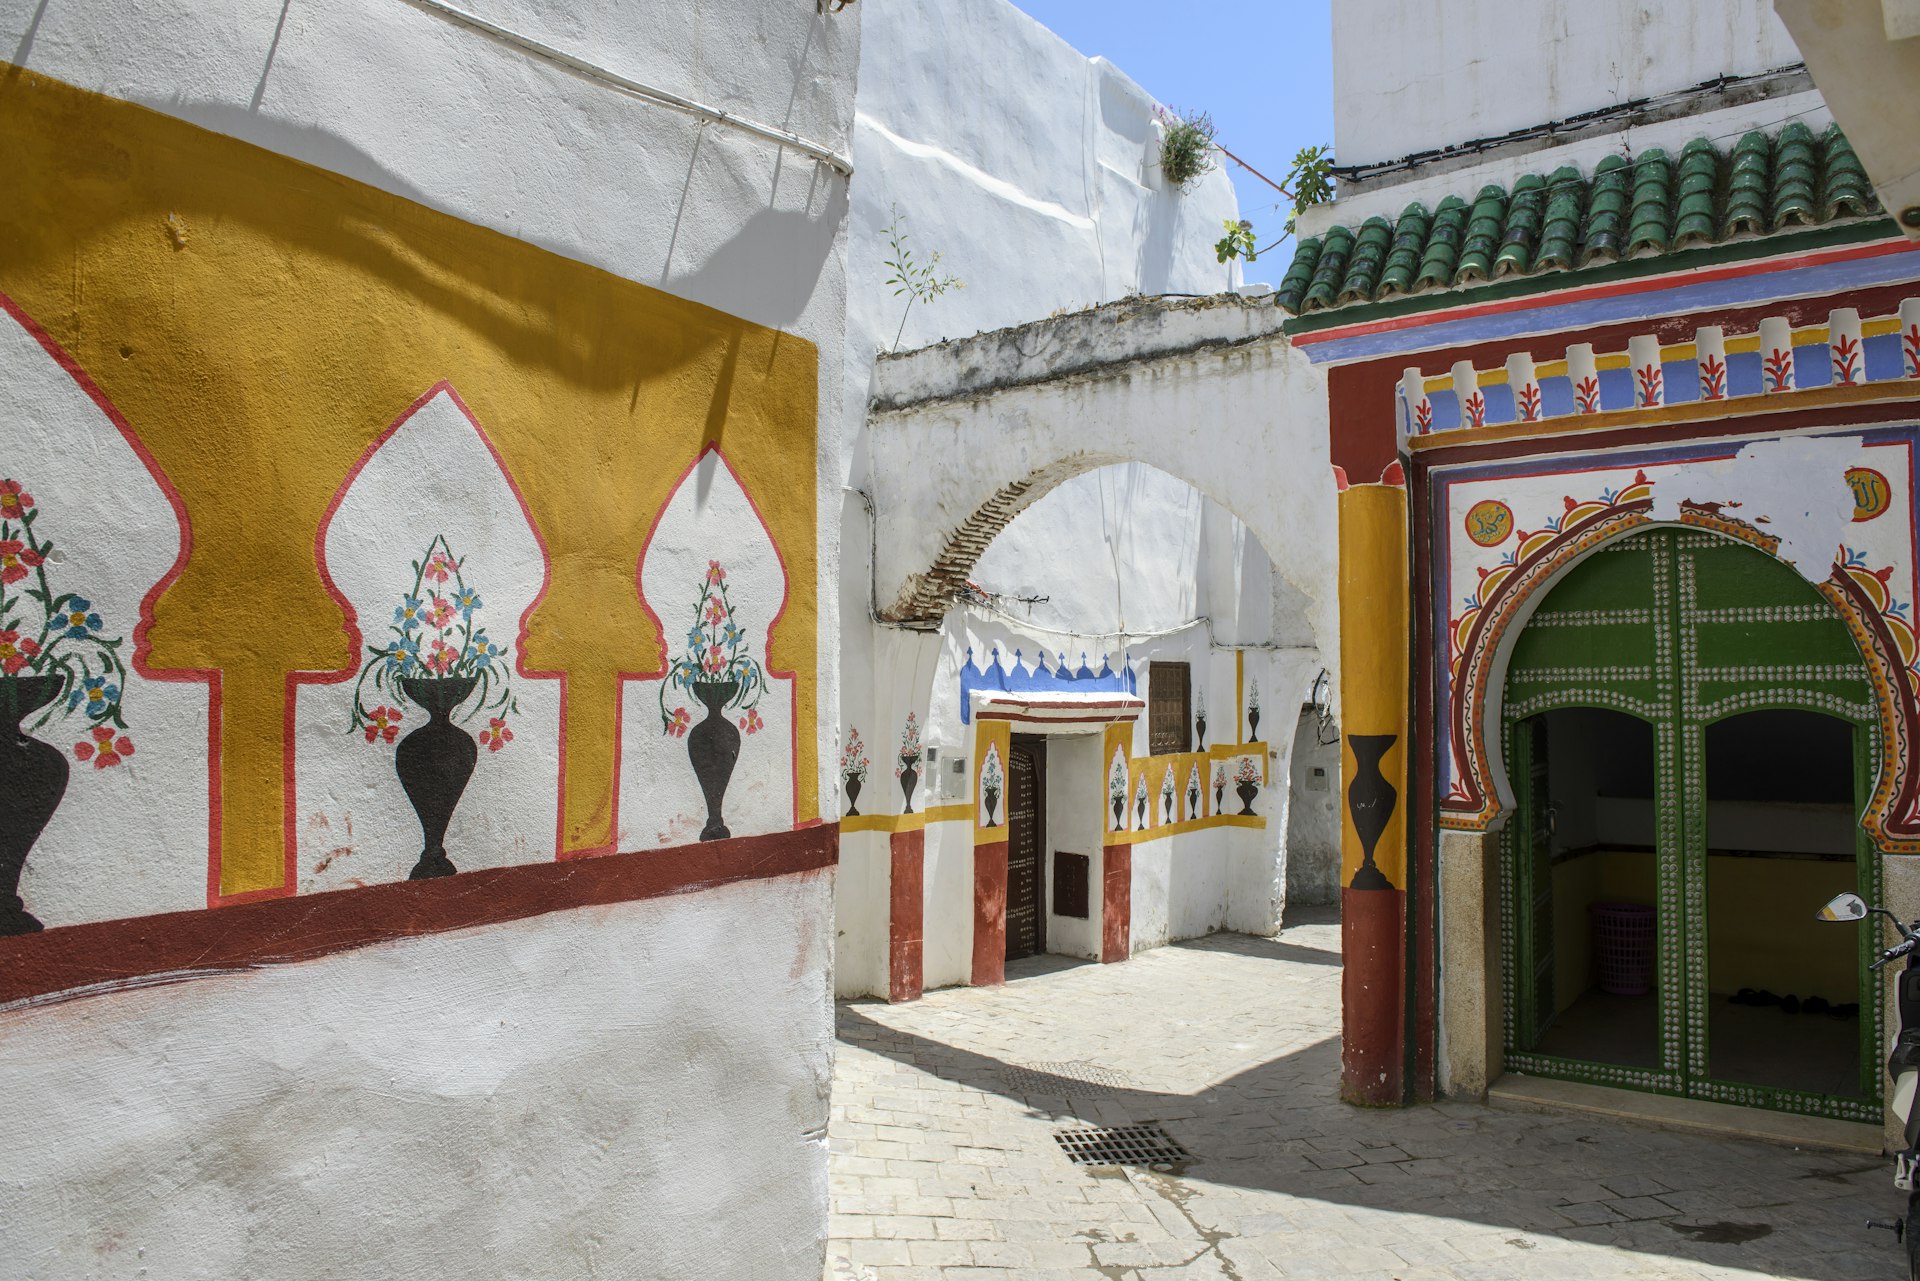 The streets of Tetouan, Morocco